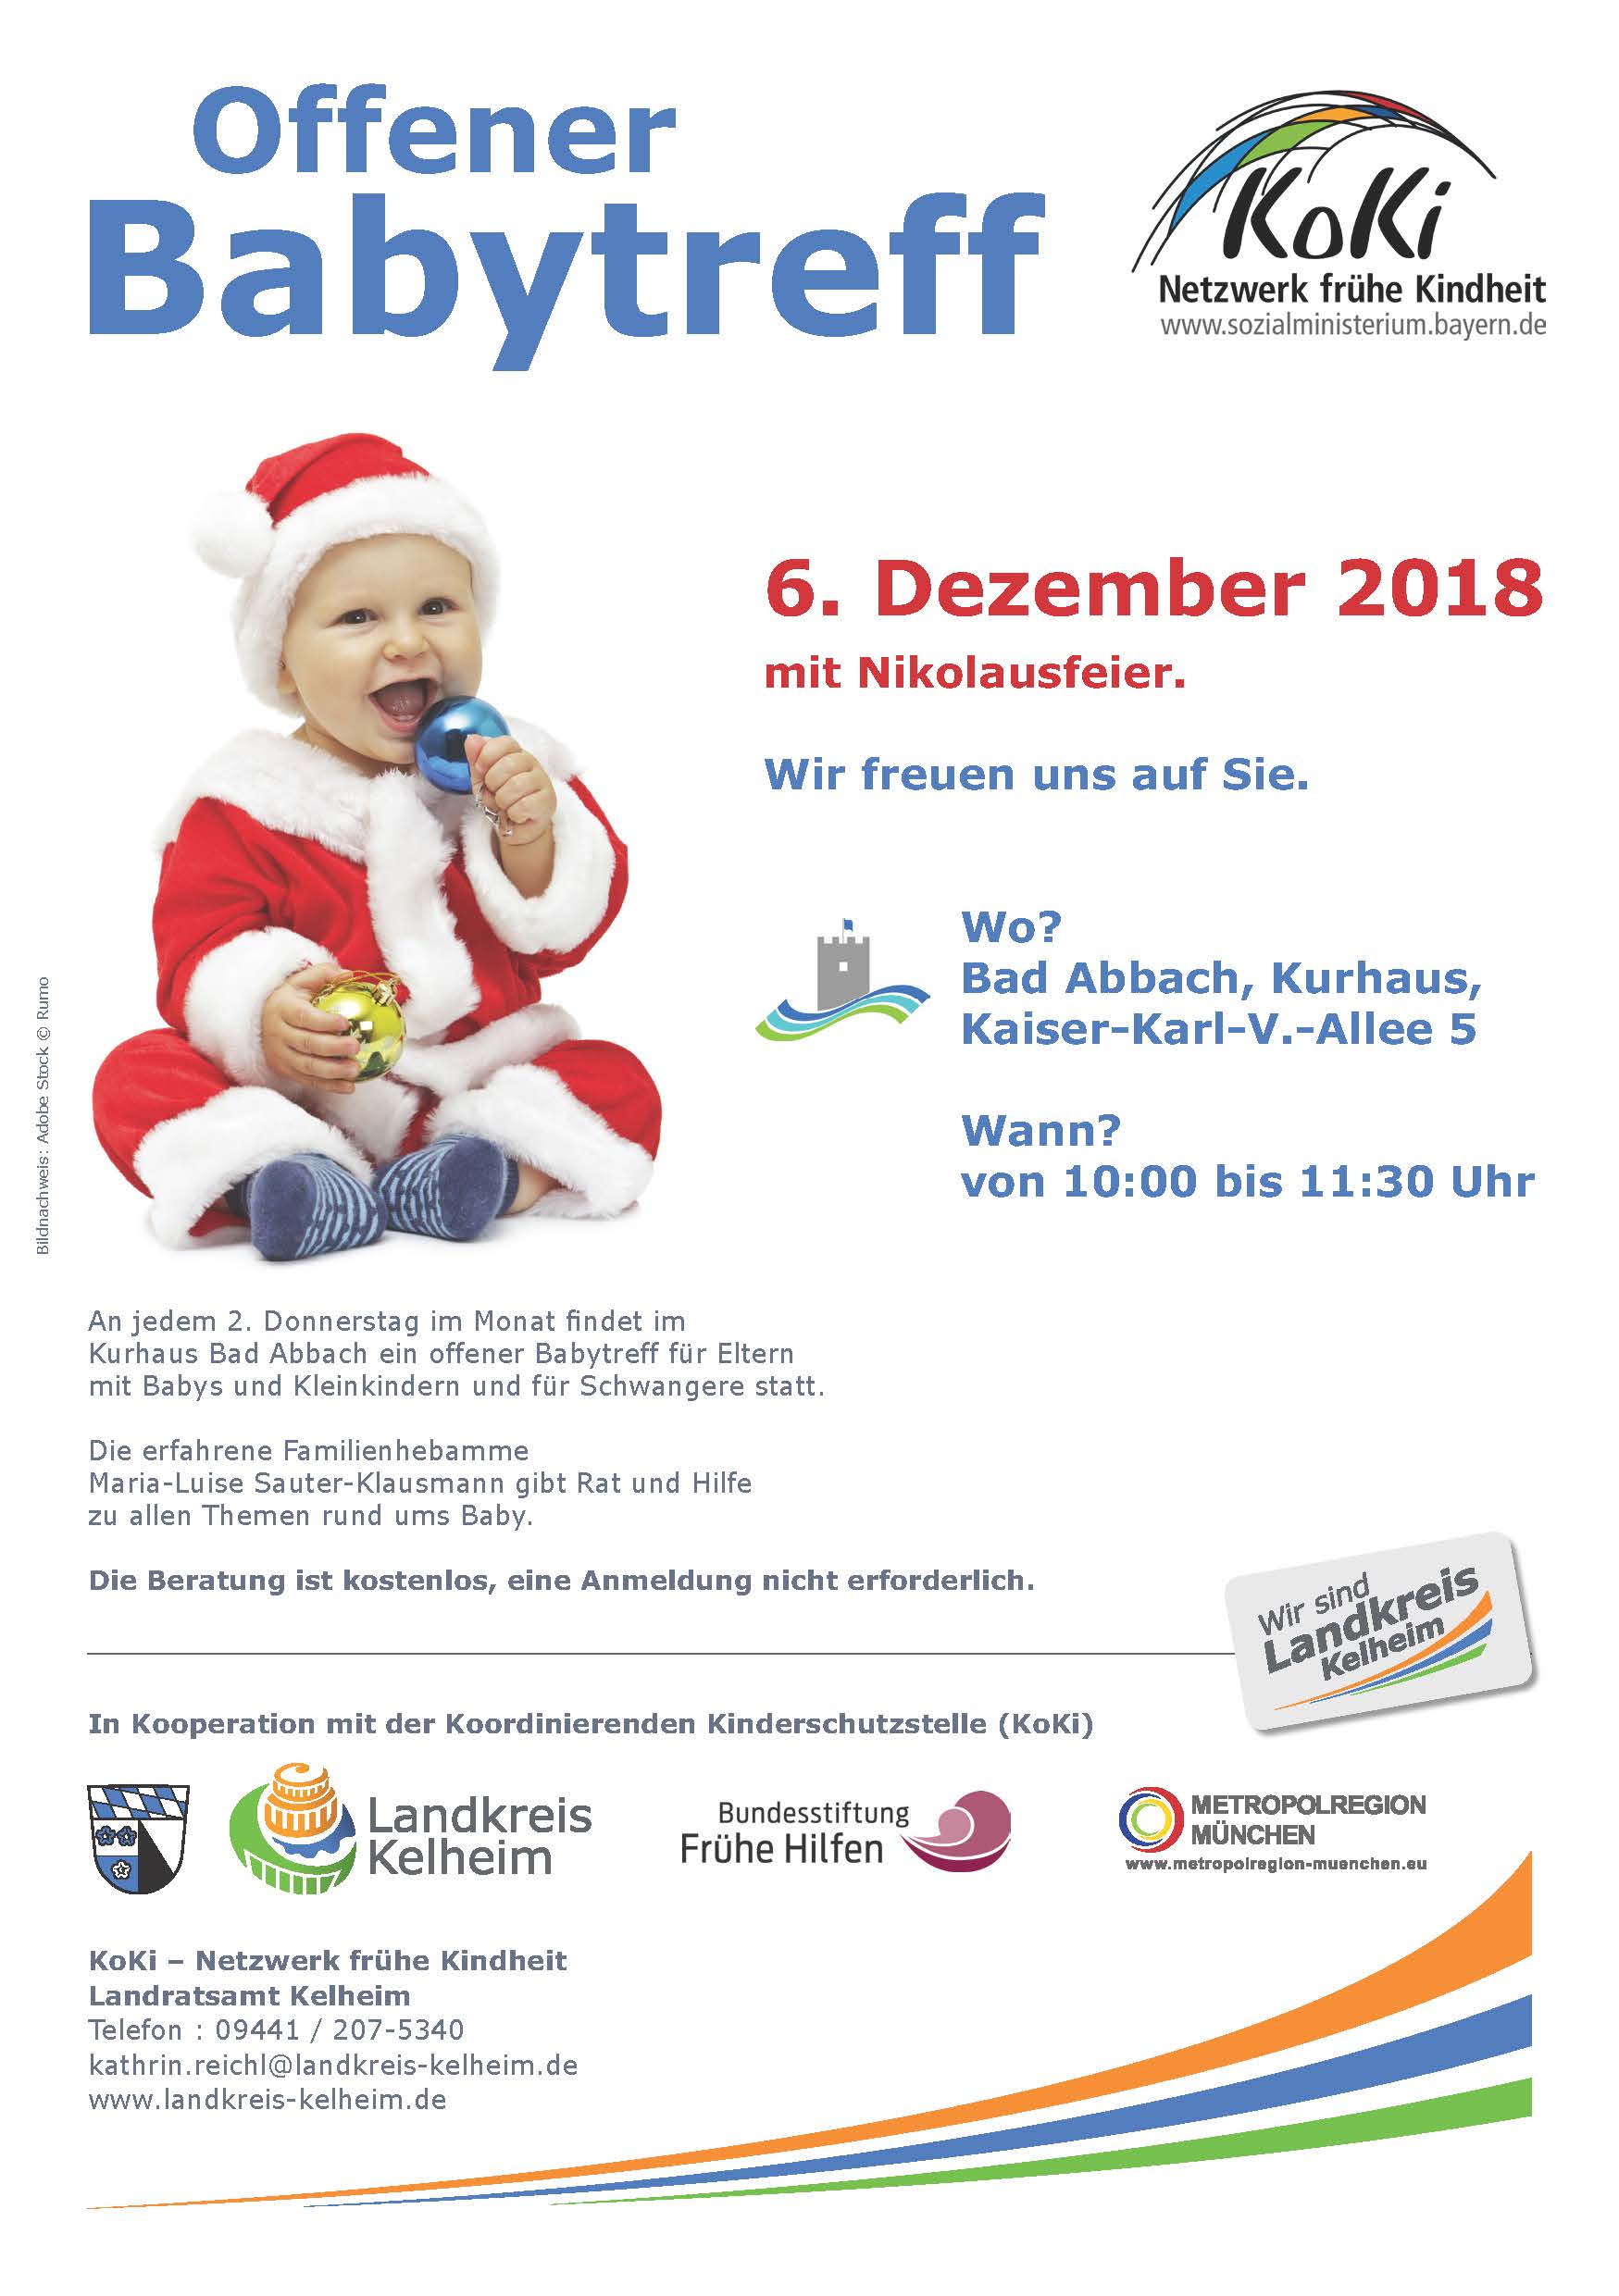 Nikolausfeier im offenen Babytreff Bad Abbach